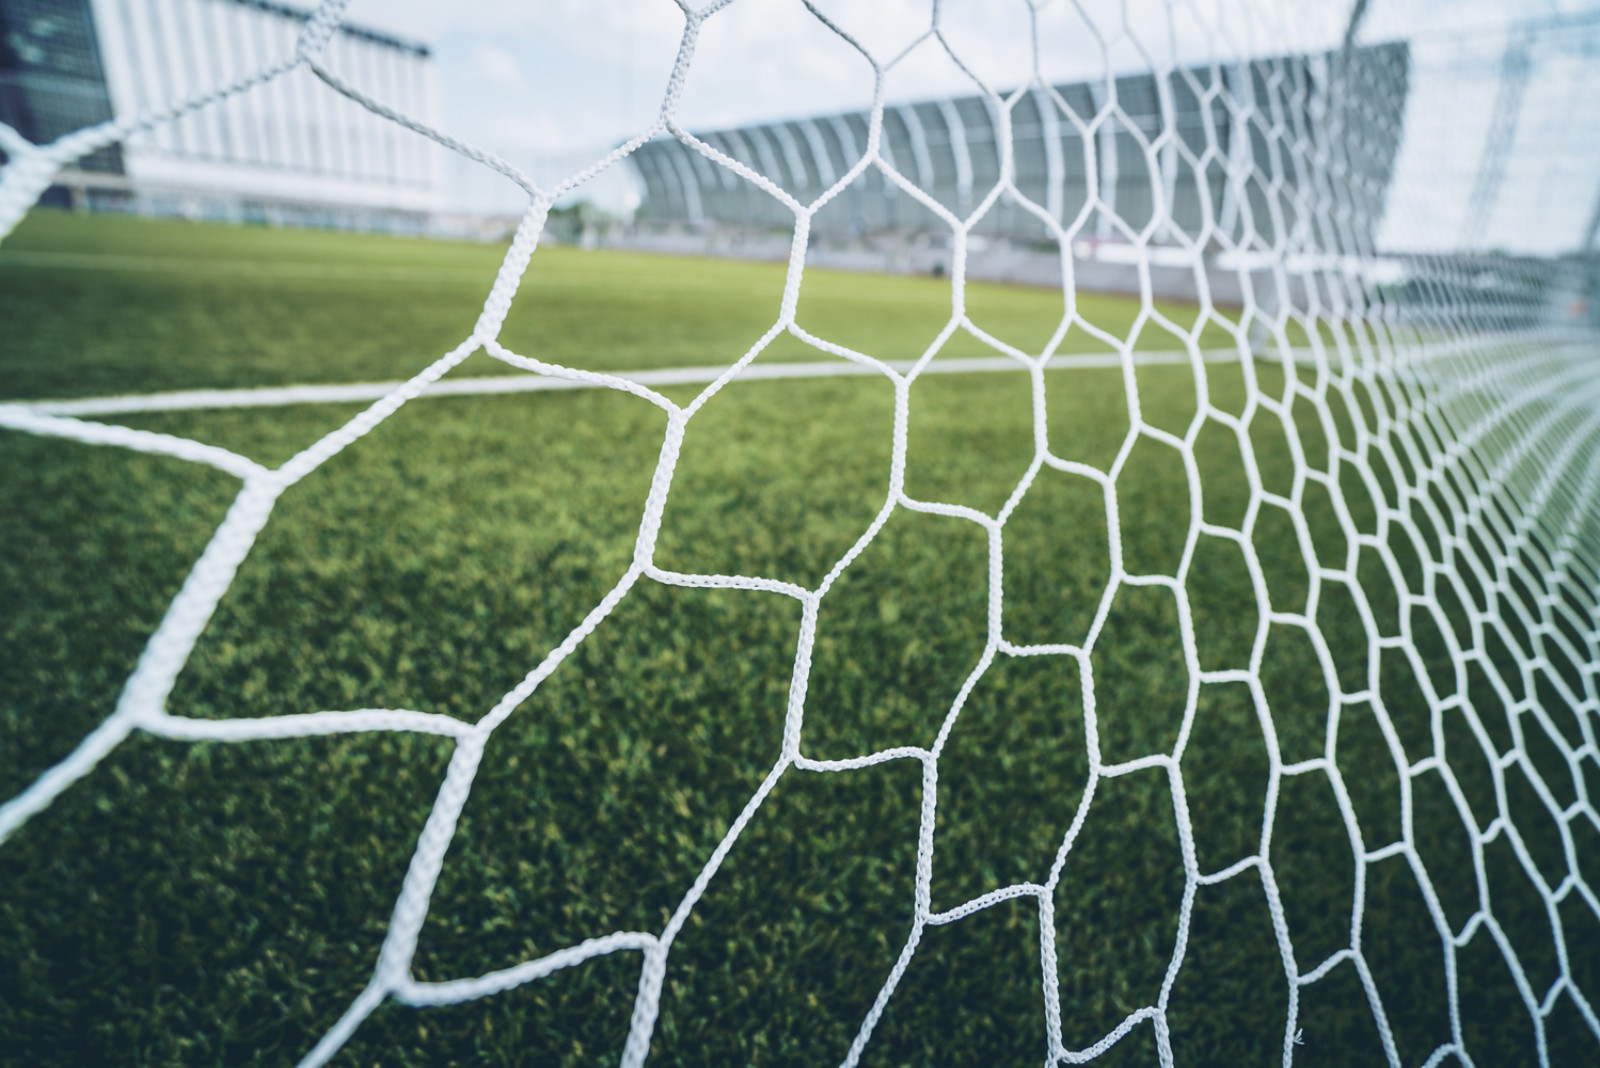 Soccer football net background over green grass and blurry stadium behind